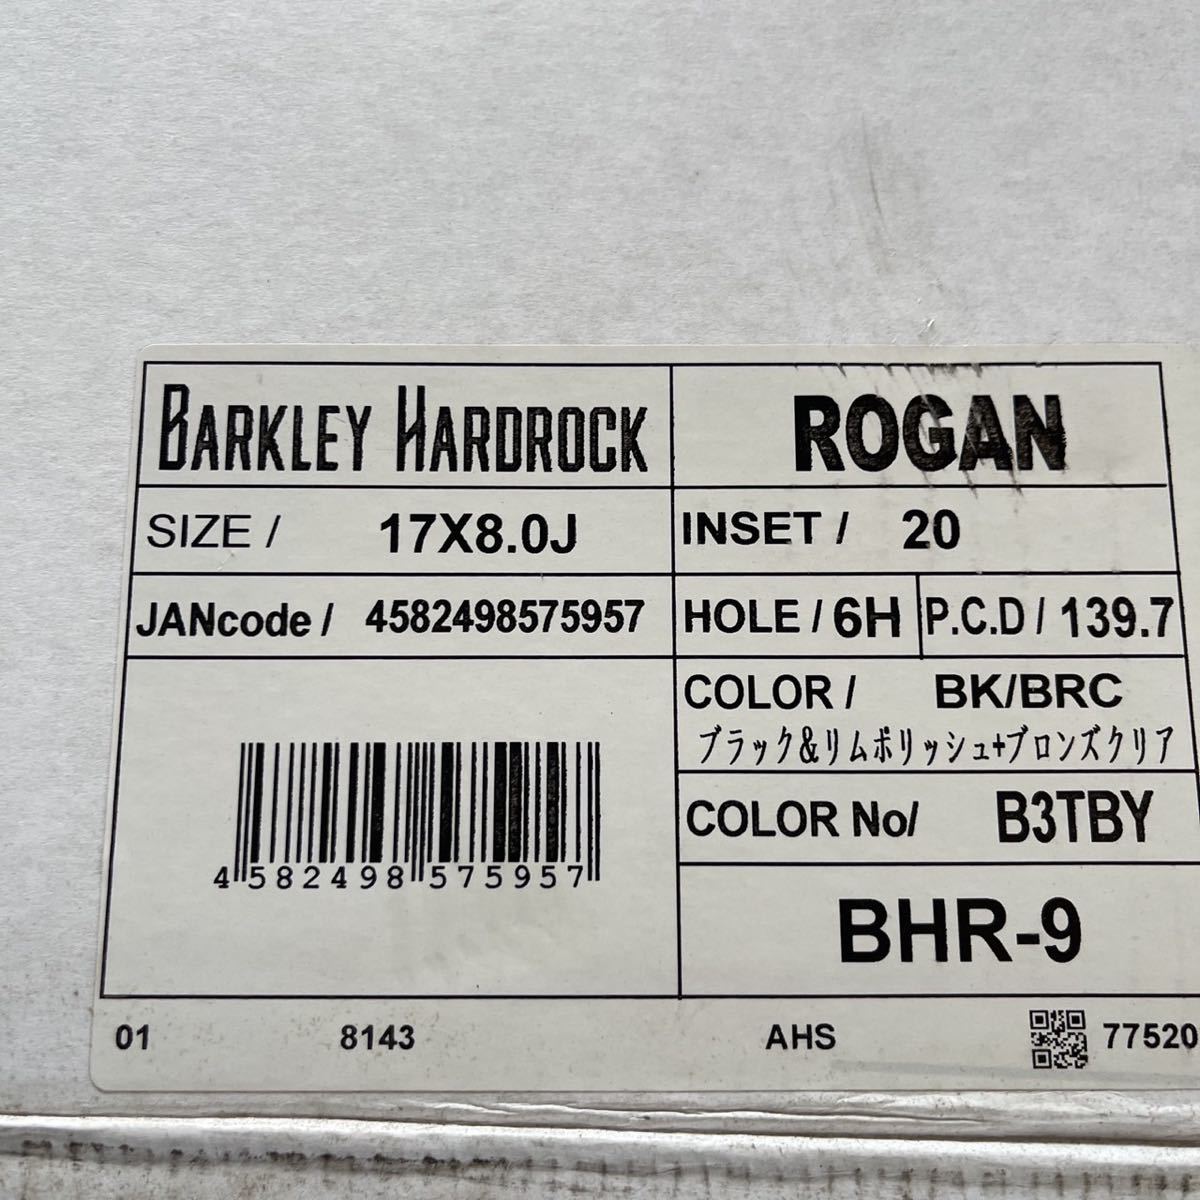 [ new goods ] Berkley hard rock Rogan 17×8J+20 139.7-6H Land Cruiser Prado Hilux Surf FJ Cruiser 4 pcs set 